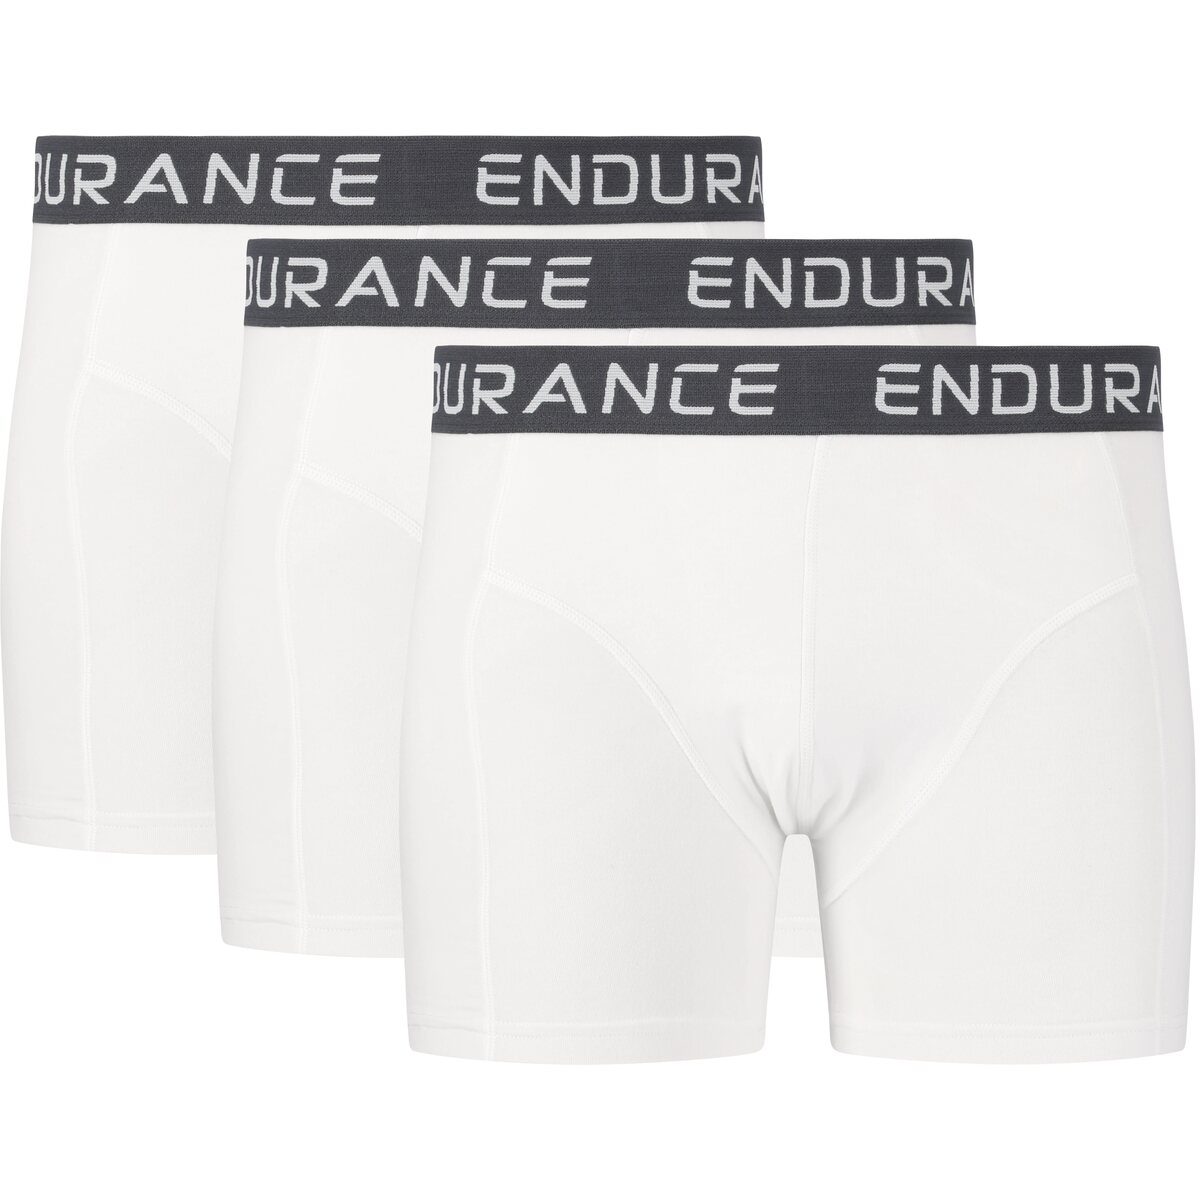 Underwear -  endurance Burke M Boxershorts 3-Pack